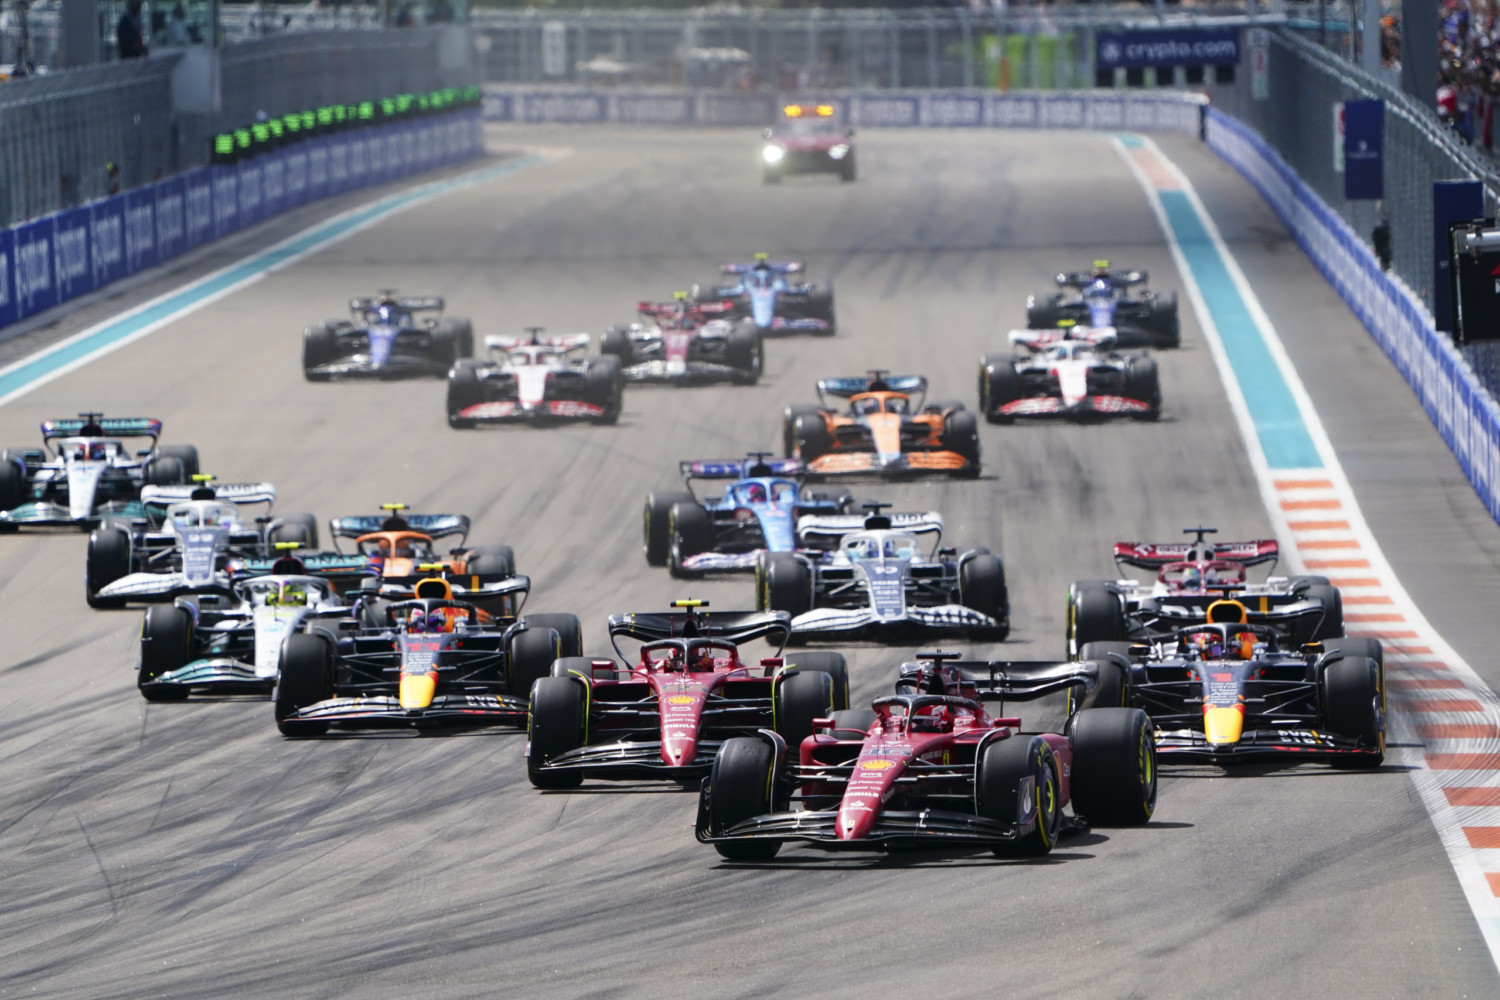 French Grand Prix Cut from F1 Schedule, Belgium Renewed